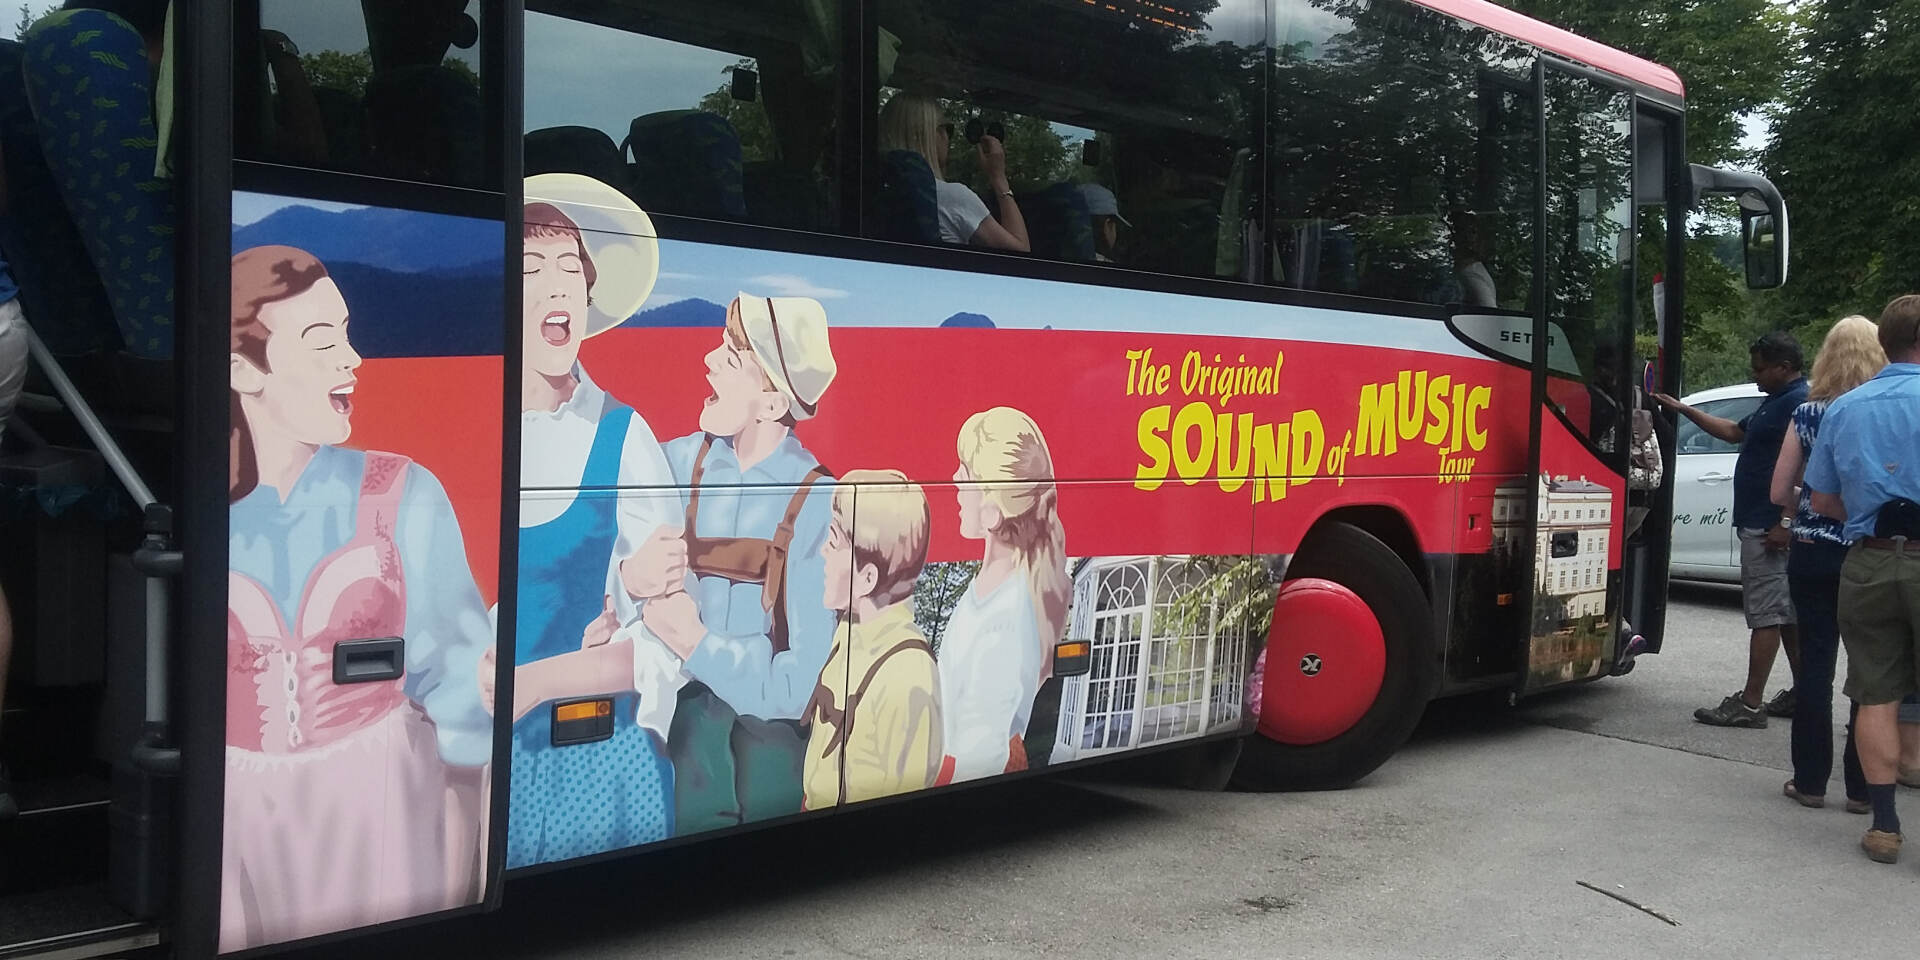 Original Sound of Music Tour® - tour bus © Salzburg Panorama Tours